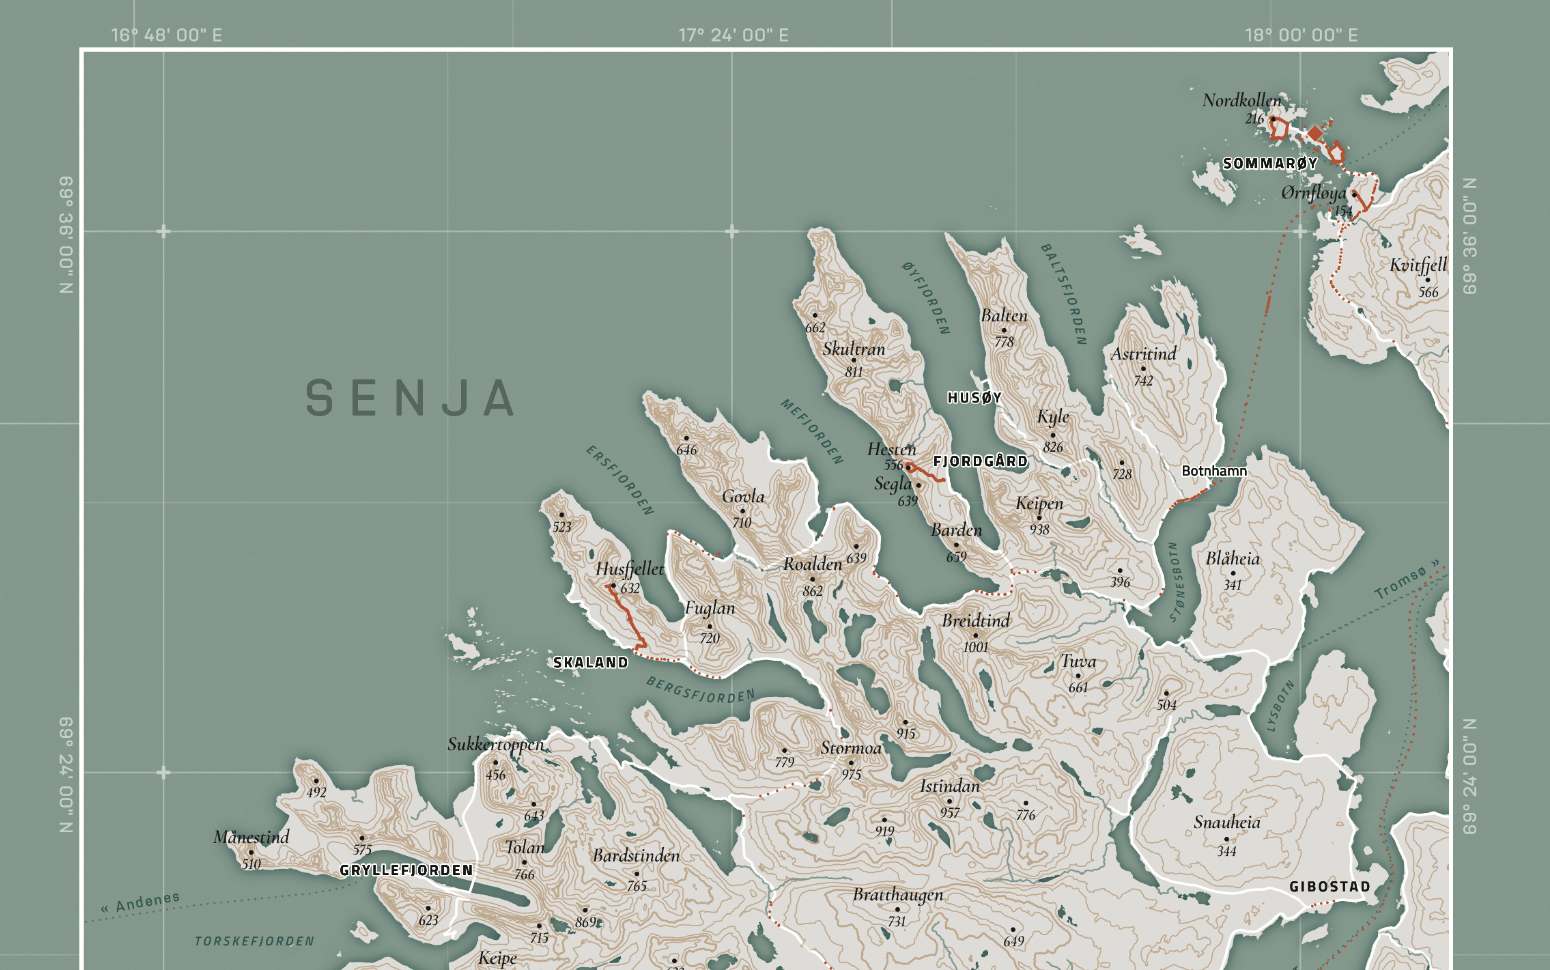 Zooming in on Senja on the digital map